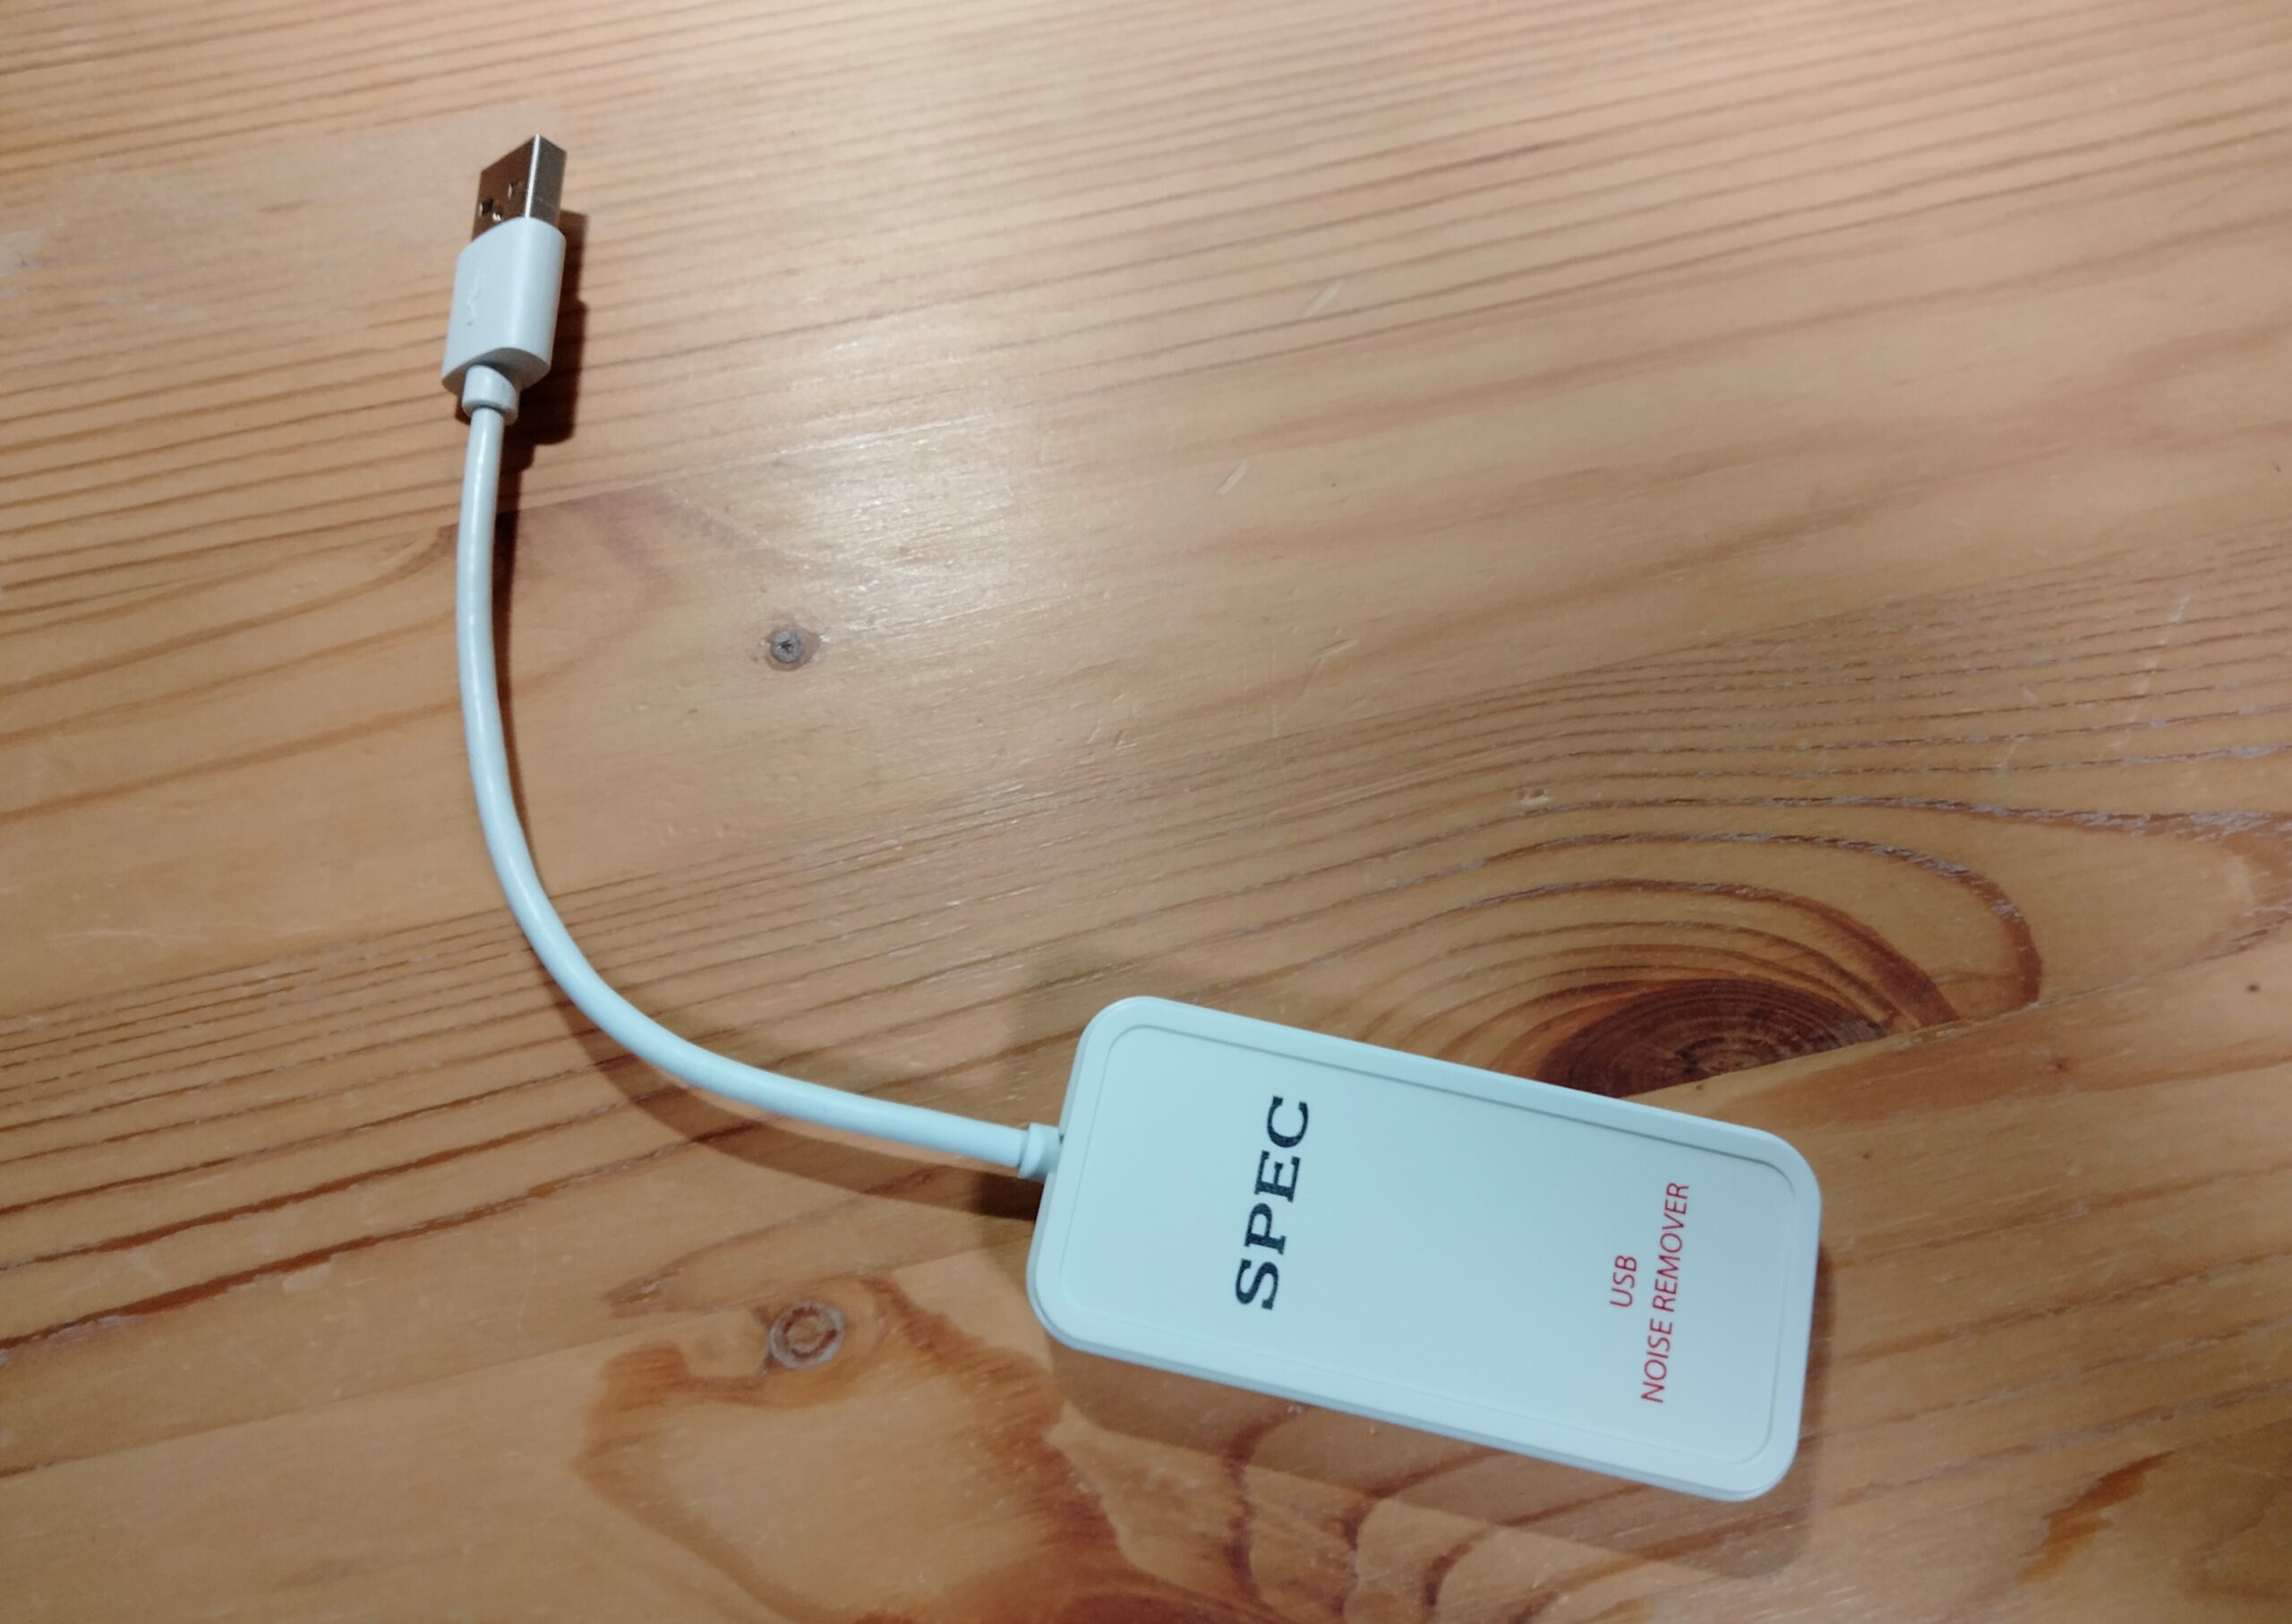 SPEC AC-USB1 USBノイズリムーバー | とよまるブログ